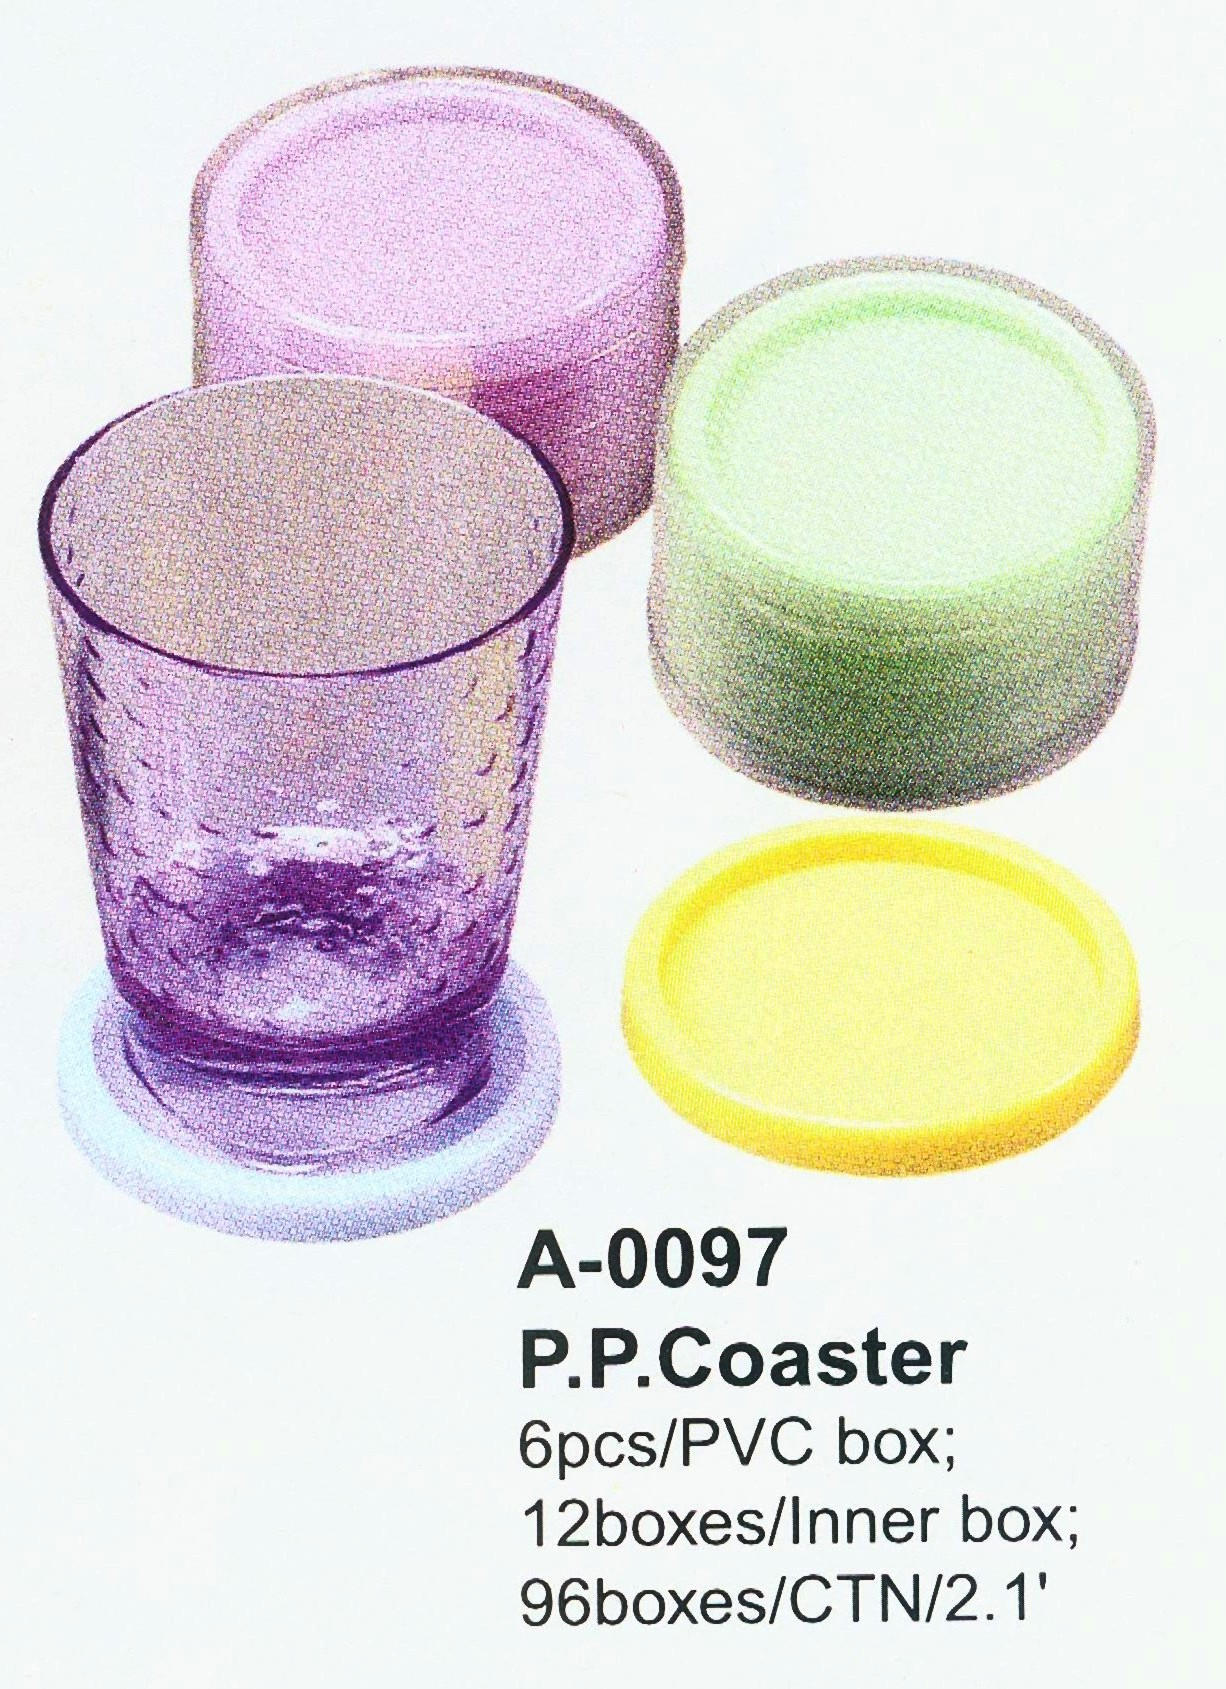 P.P. Coaster